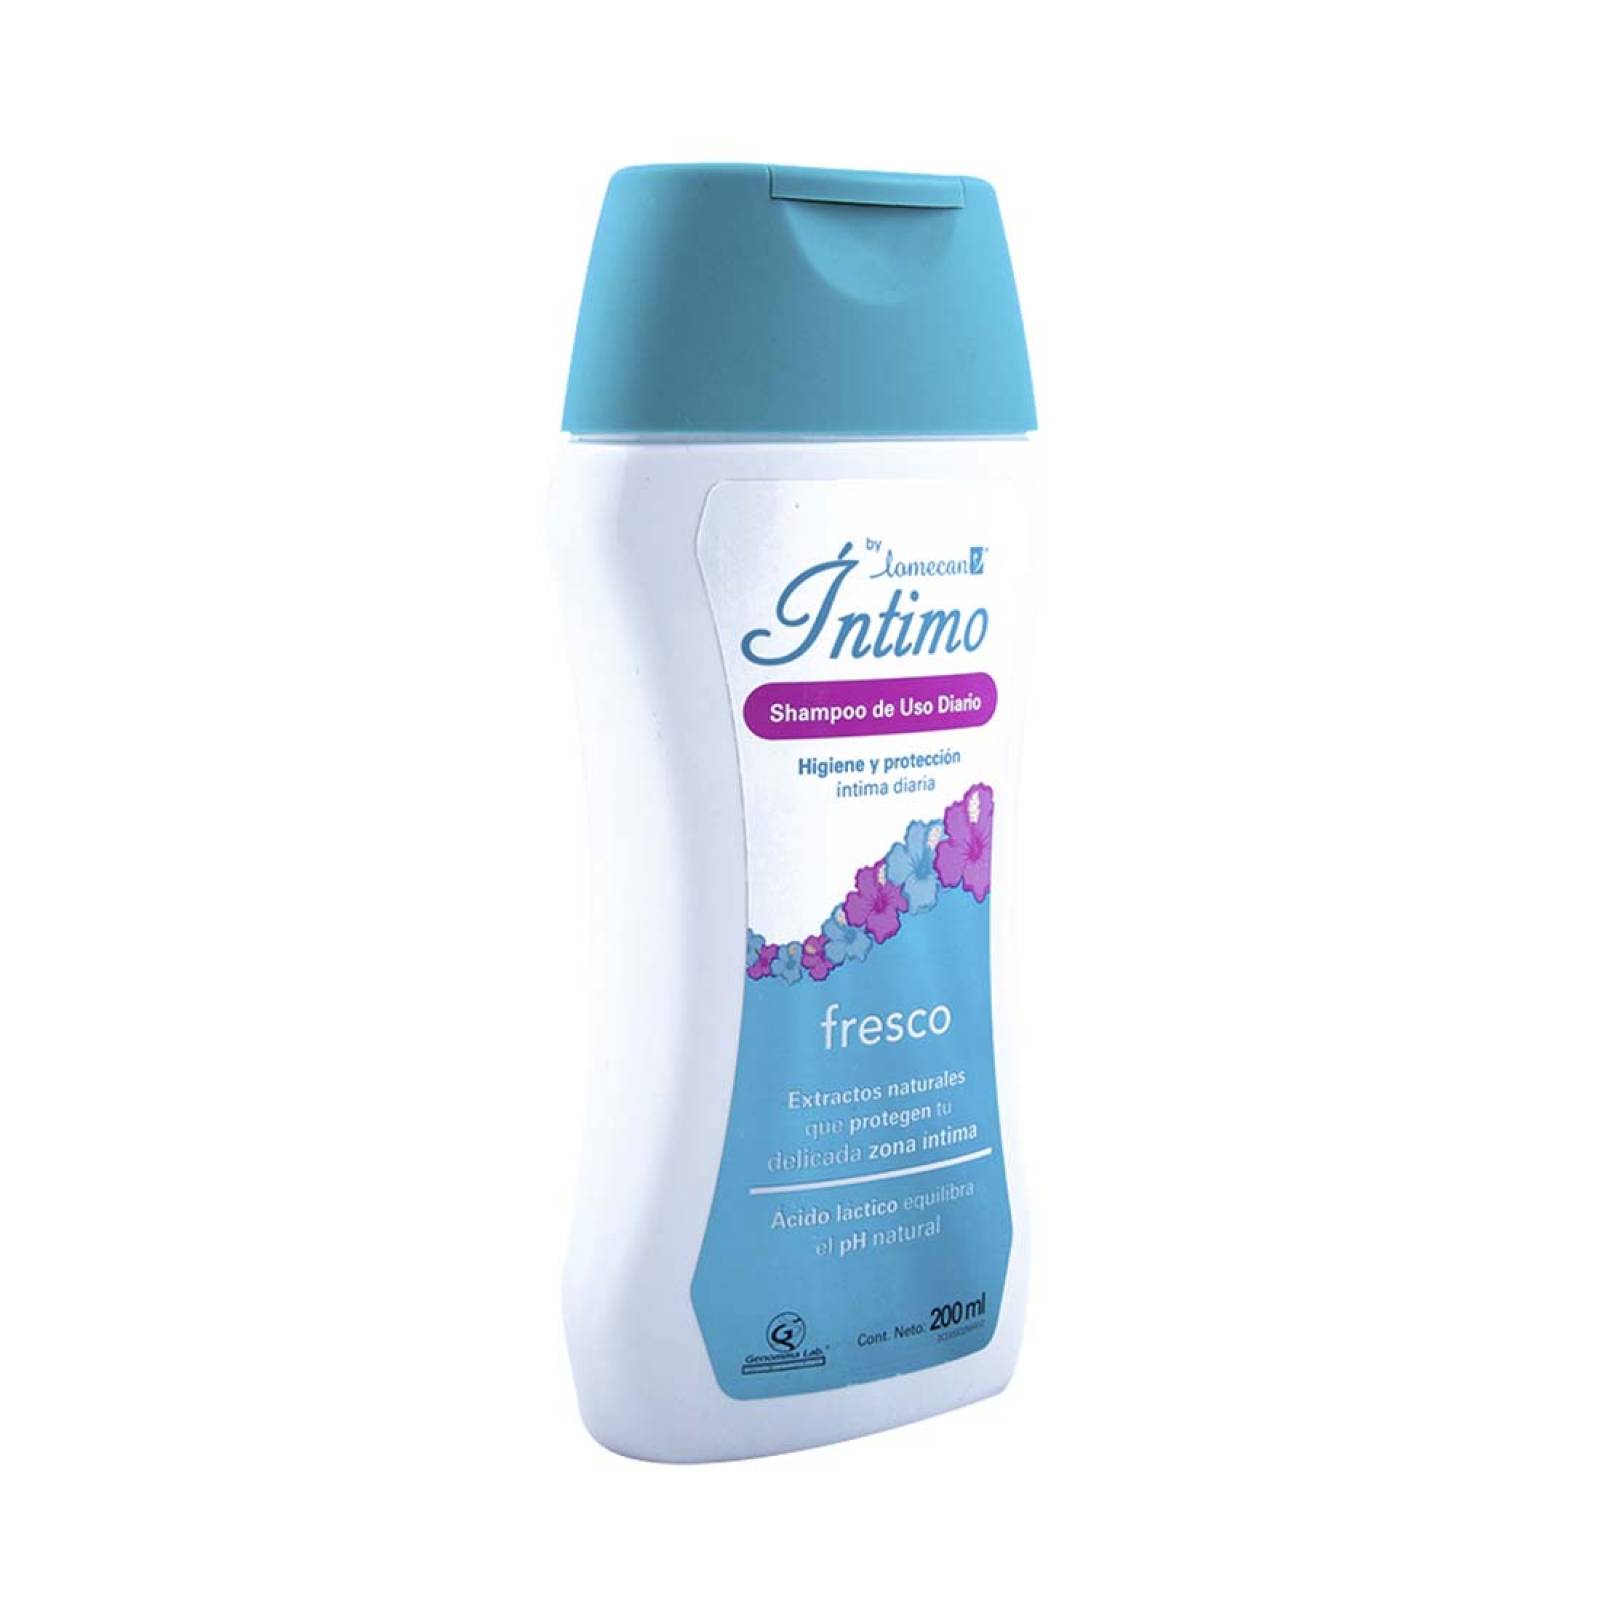 Shampoo Íntimo Lomecan V Fresco 200ml Genomma Lab